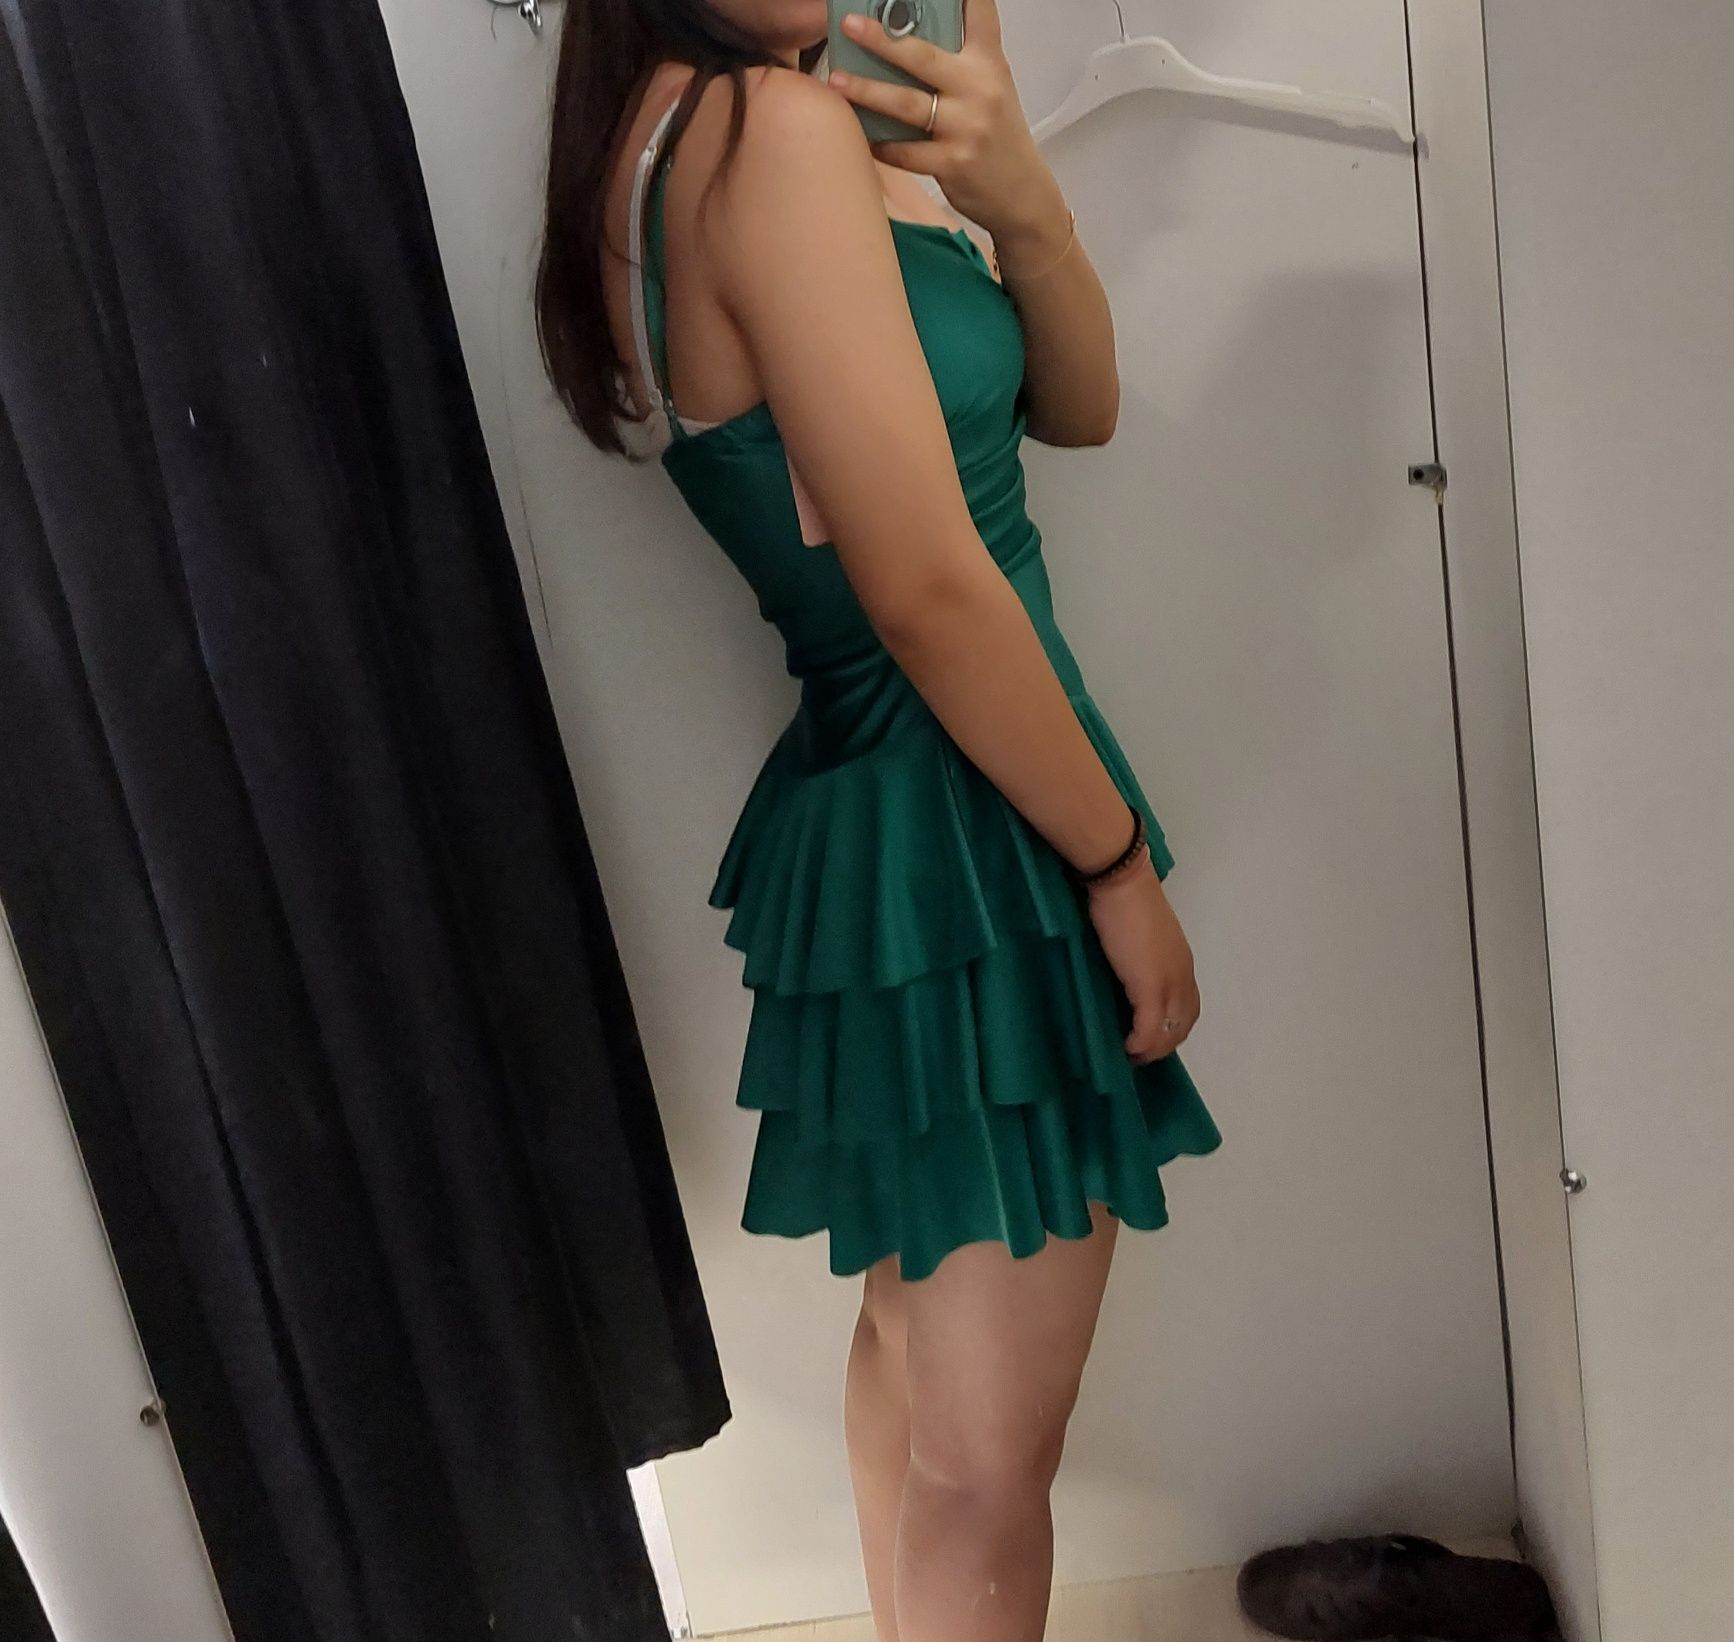 Rochie verde noua